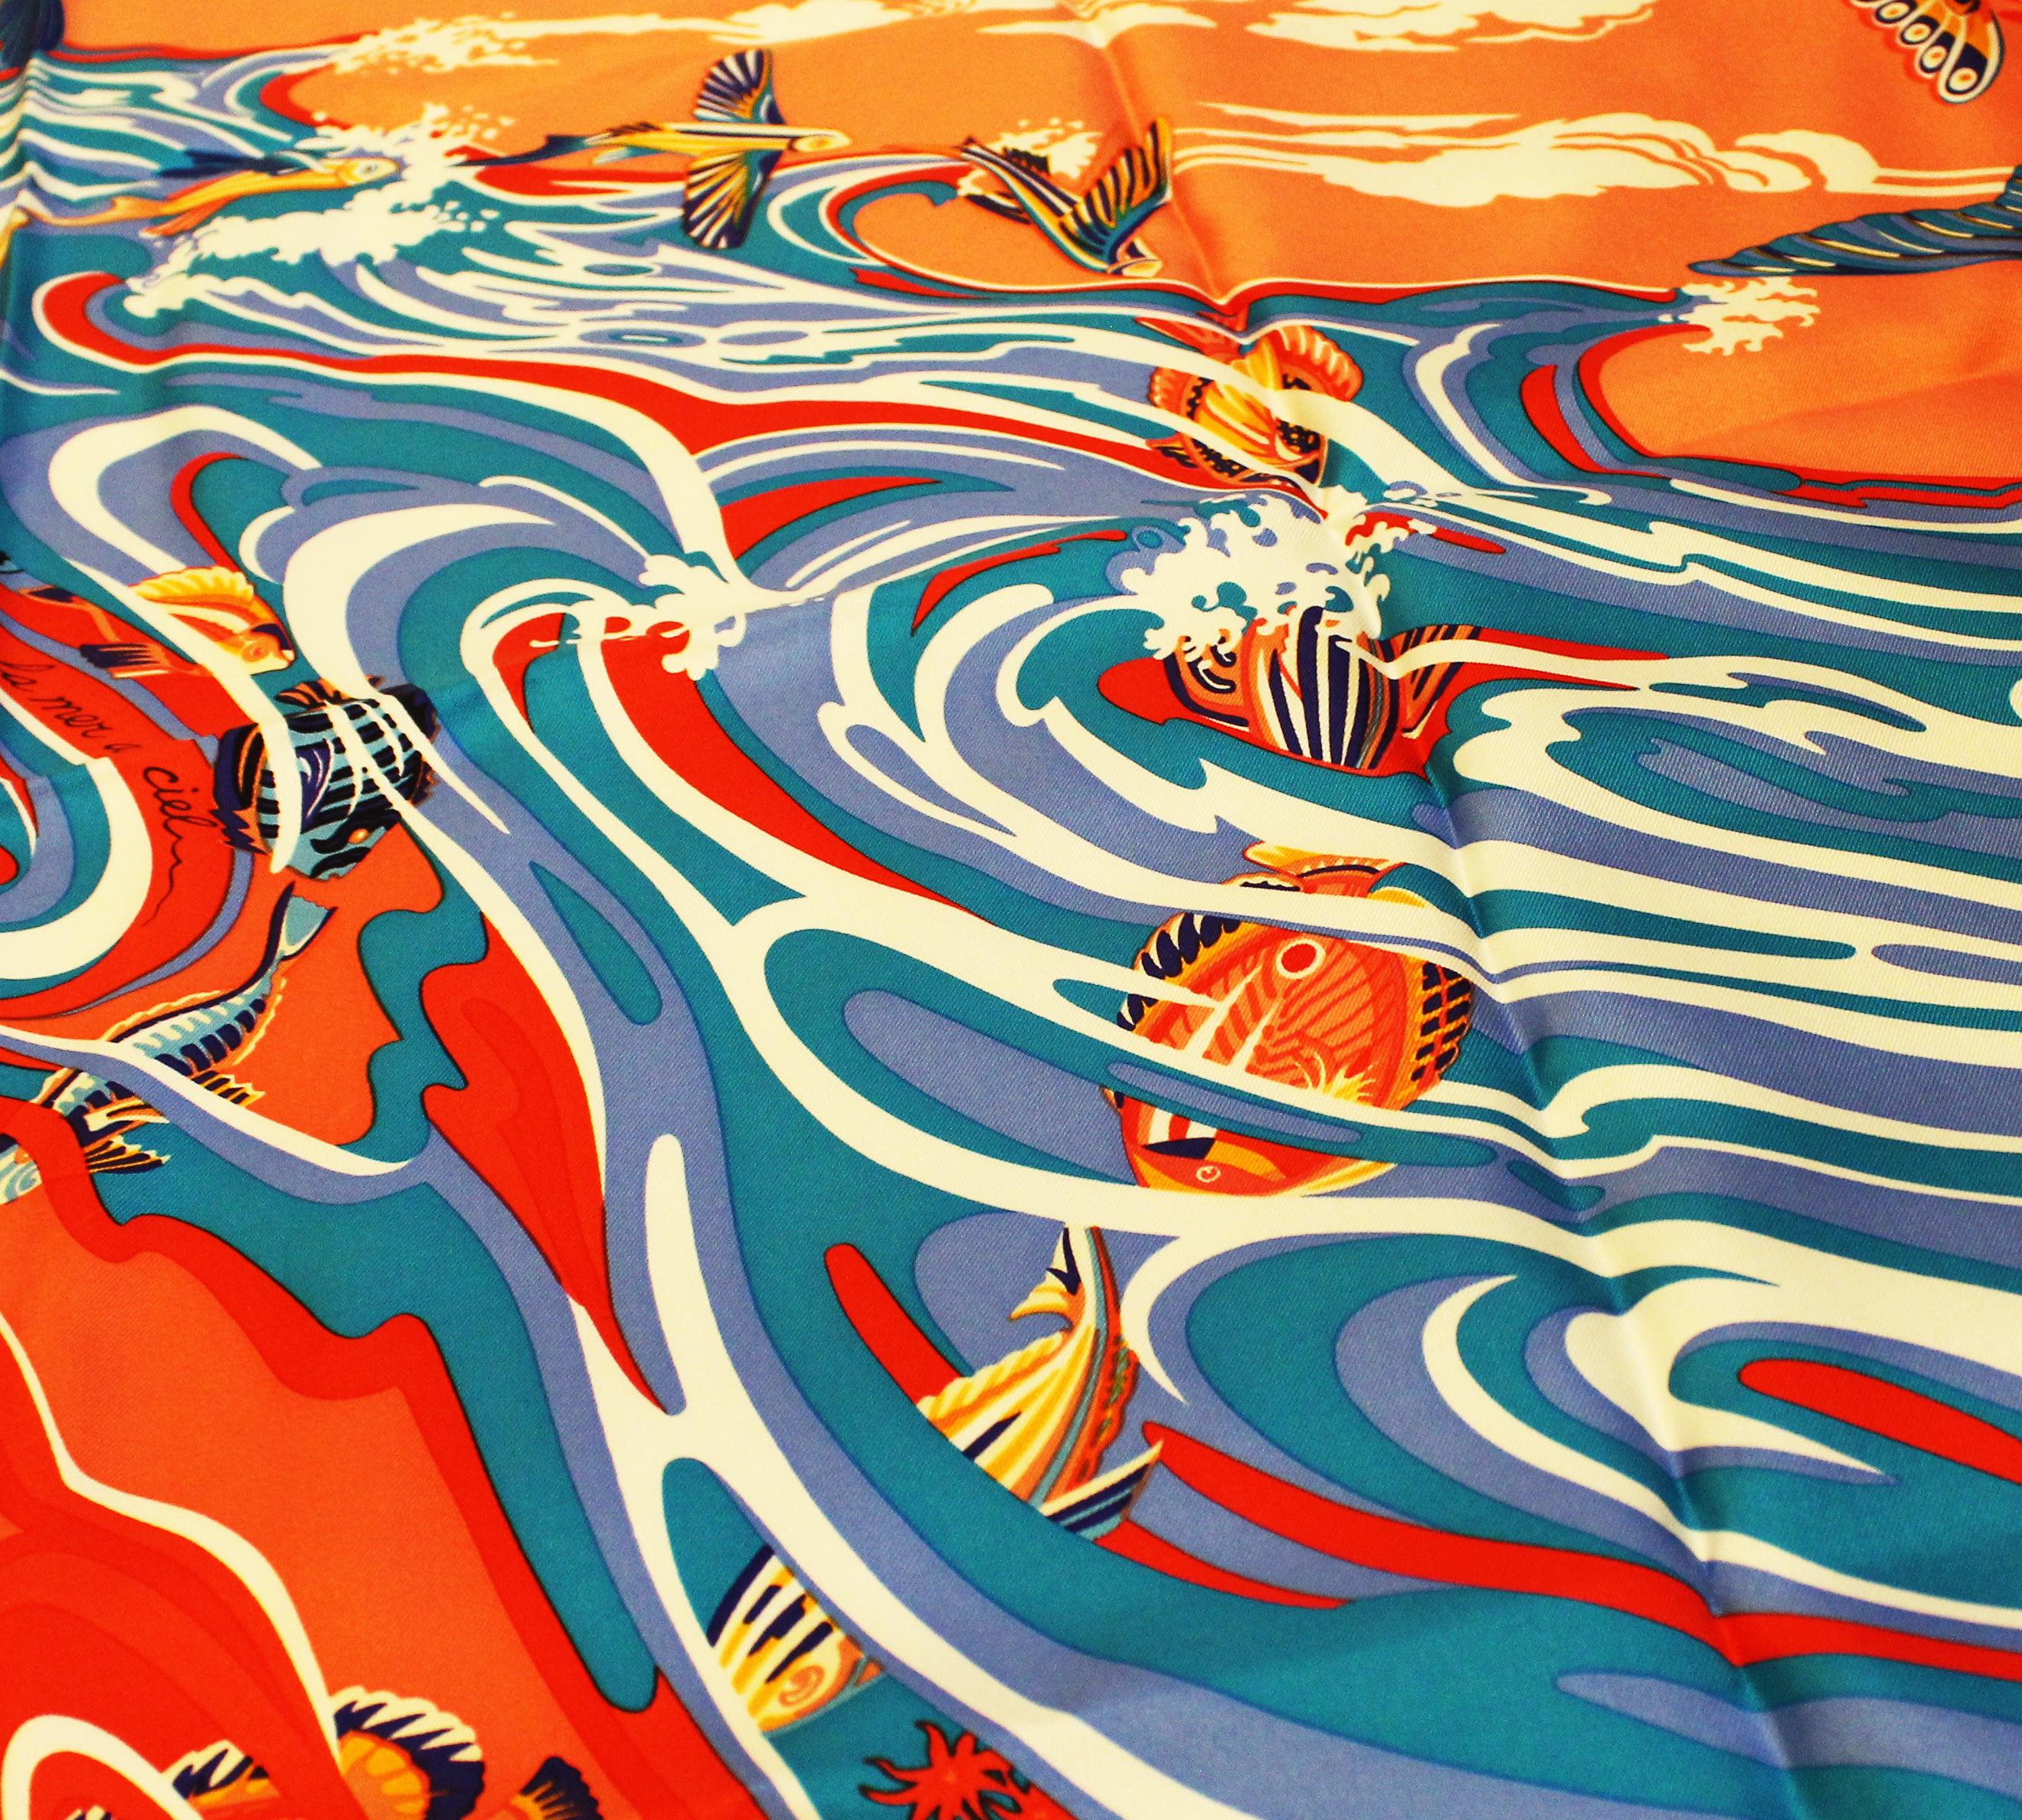 Orange Hermes Silk De La Mer Au Ciel Scarf By Toutsy Bourthoumieux  Created in 2014